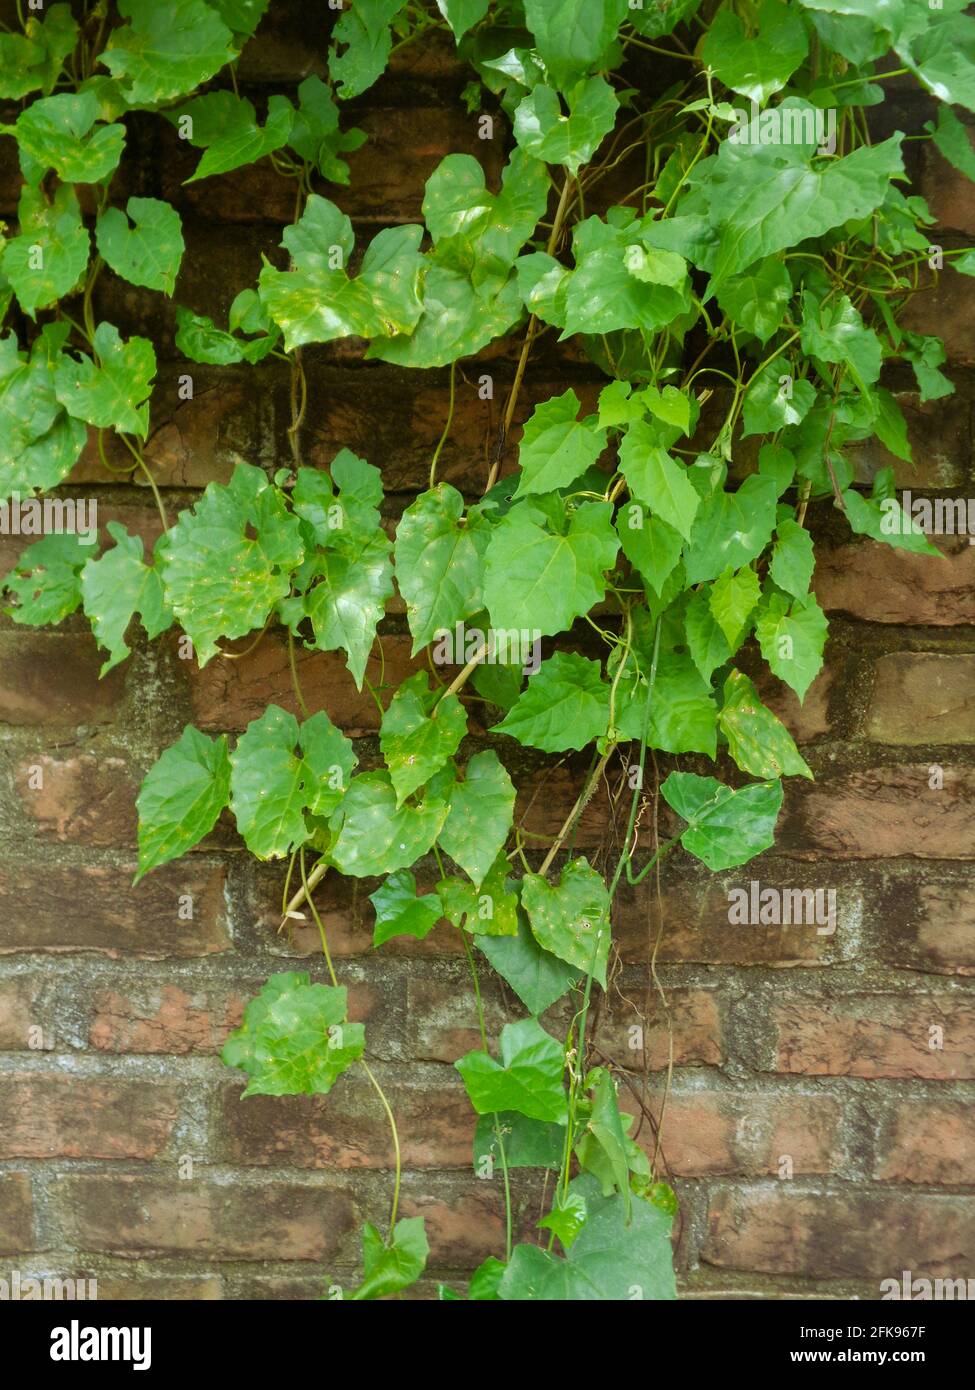 armani Lota, Mikania micrantha Kunth, Bittervine, Germani Lota. Brick walls are covered with leaves. Stock Photo